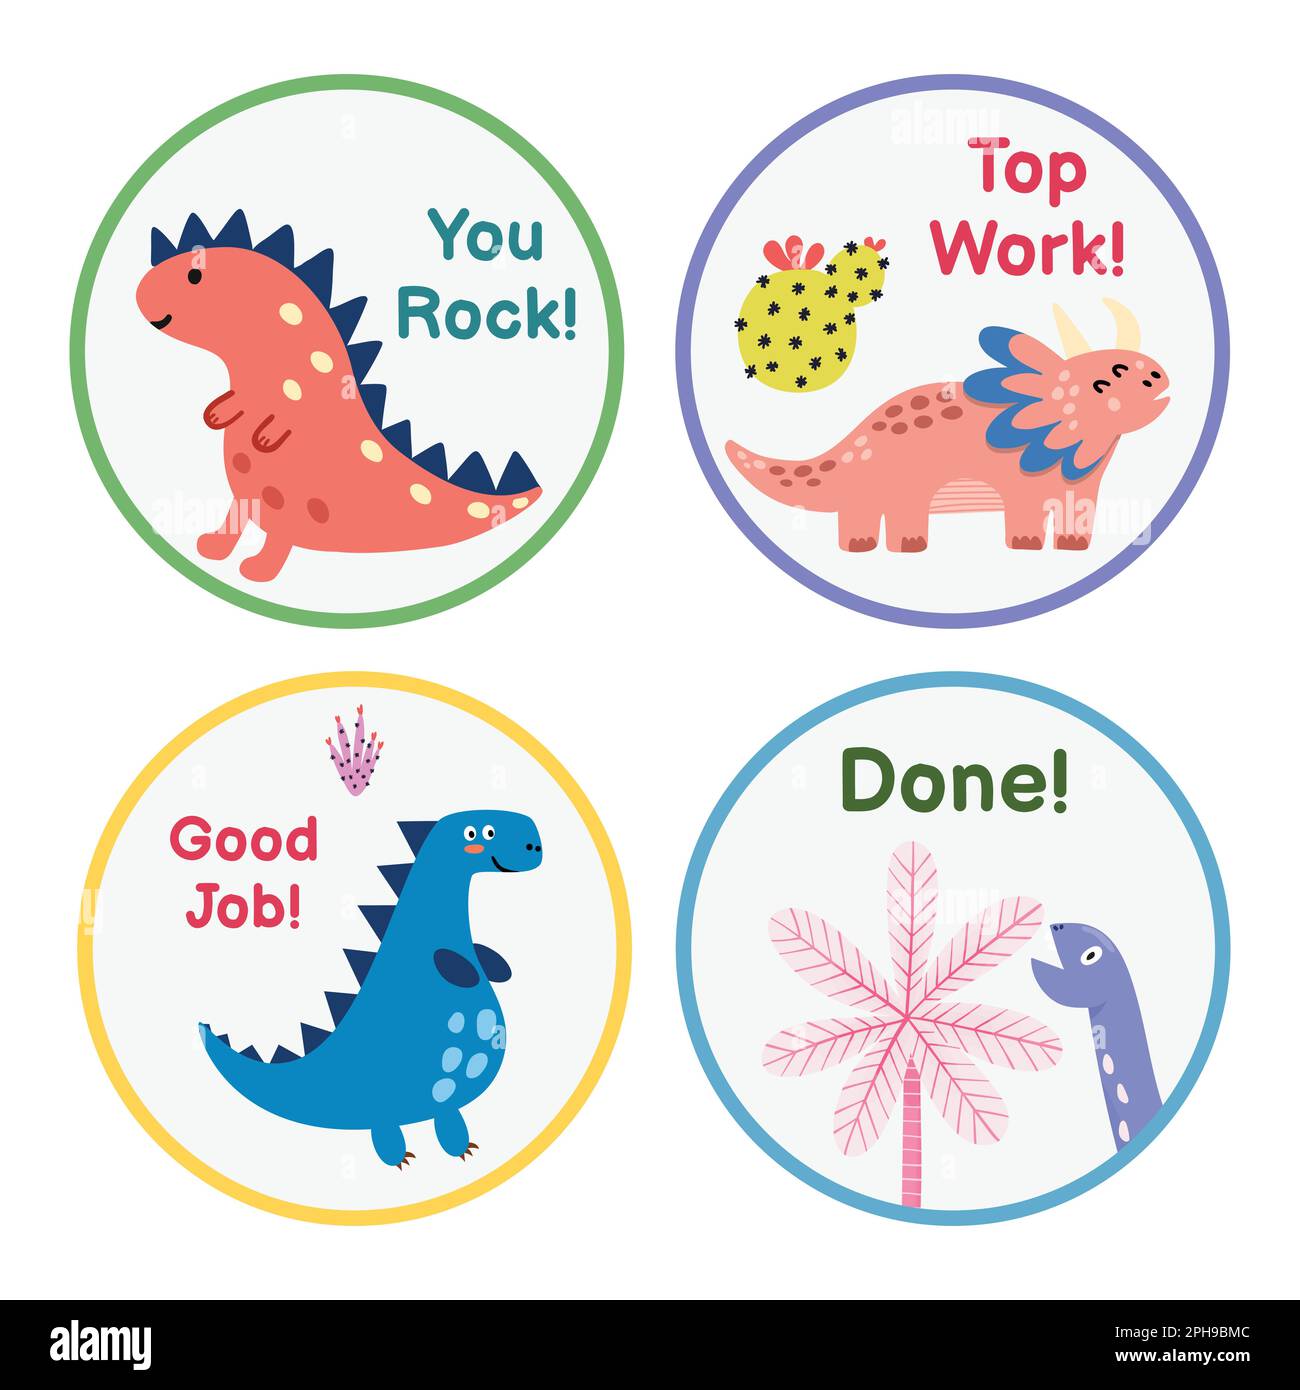 https://c8.alamy.com/comp/2PH9BMC/reward-stickers-collection-with-cute-dinosaurs-teachers-award-badges-with-funny-dinos-2PH9BMC.jpg